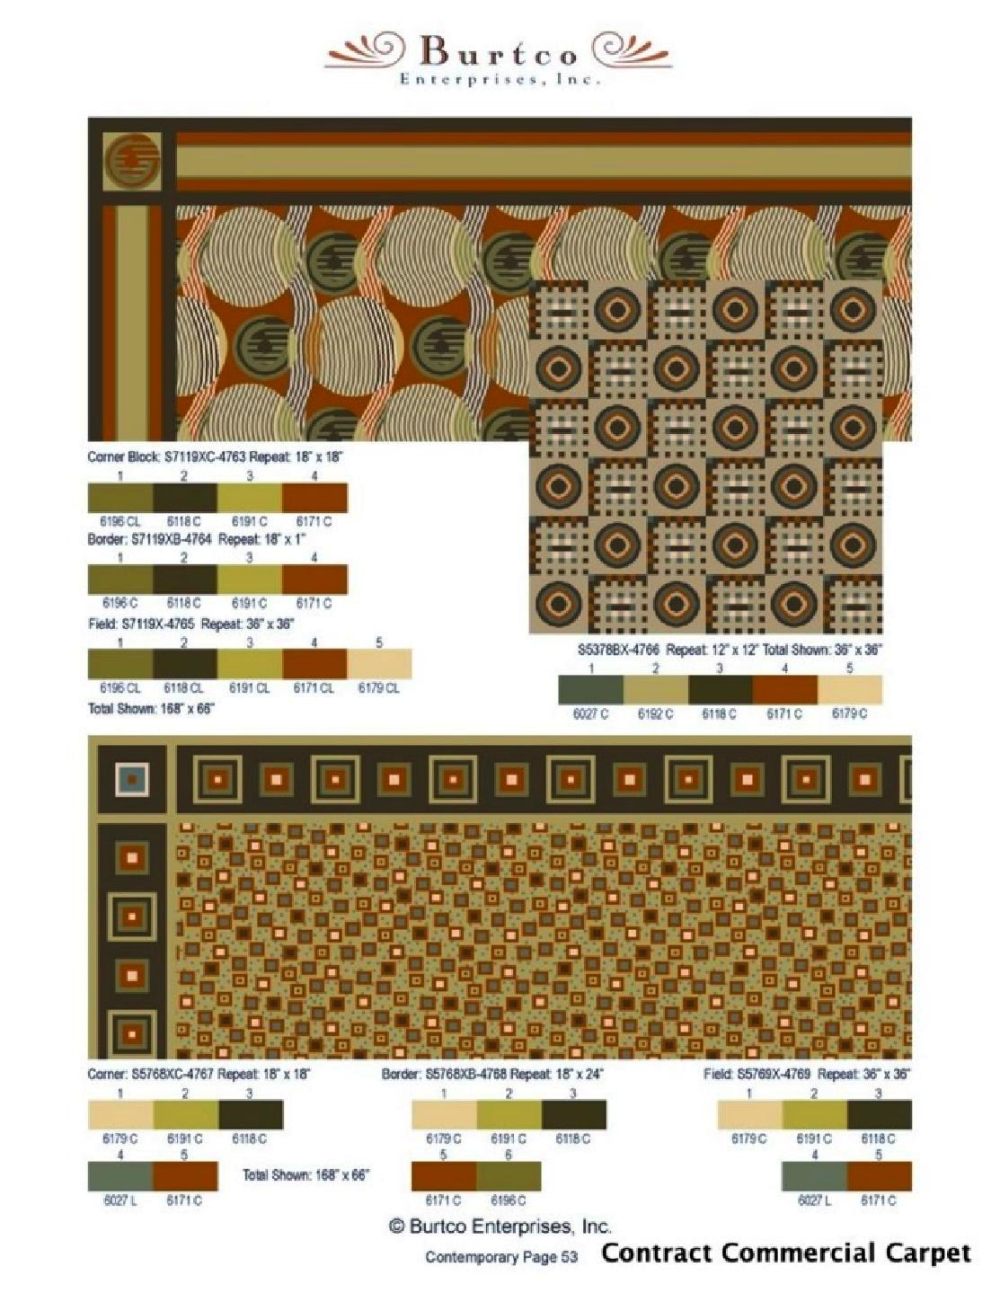 Burtco 地毯图案 58P图册_006.jpg